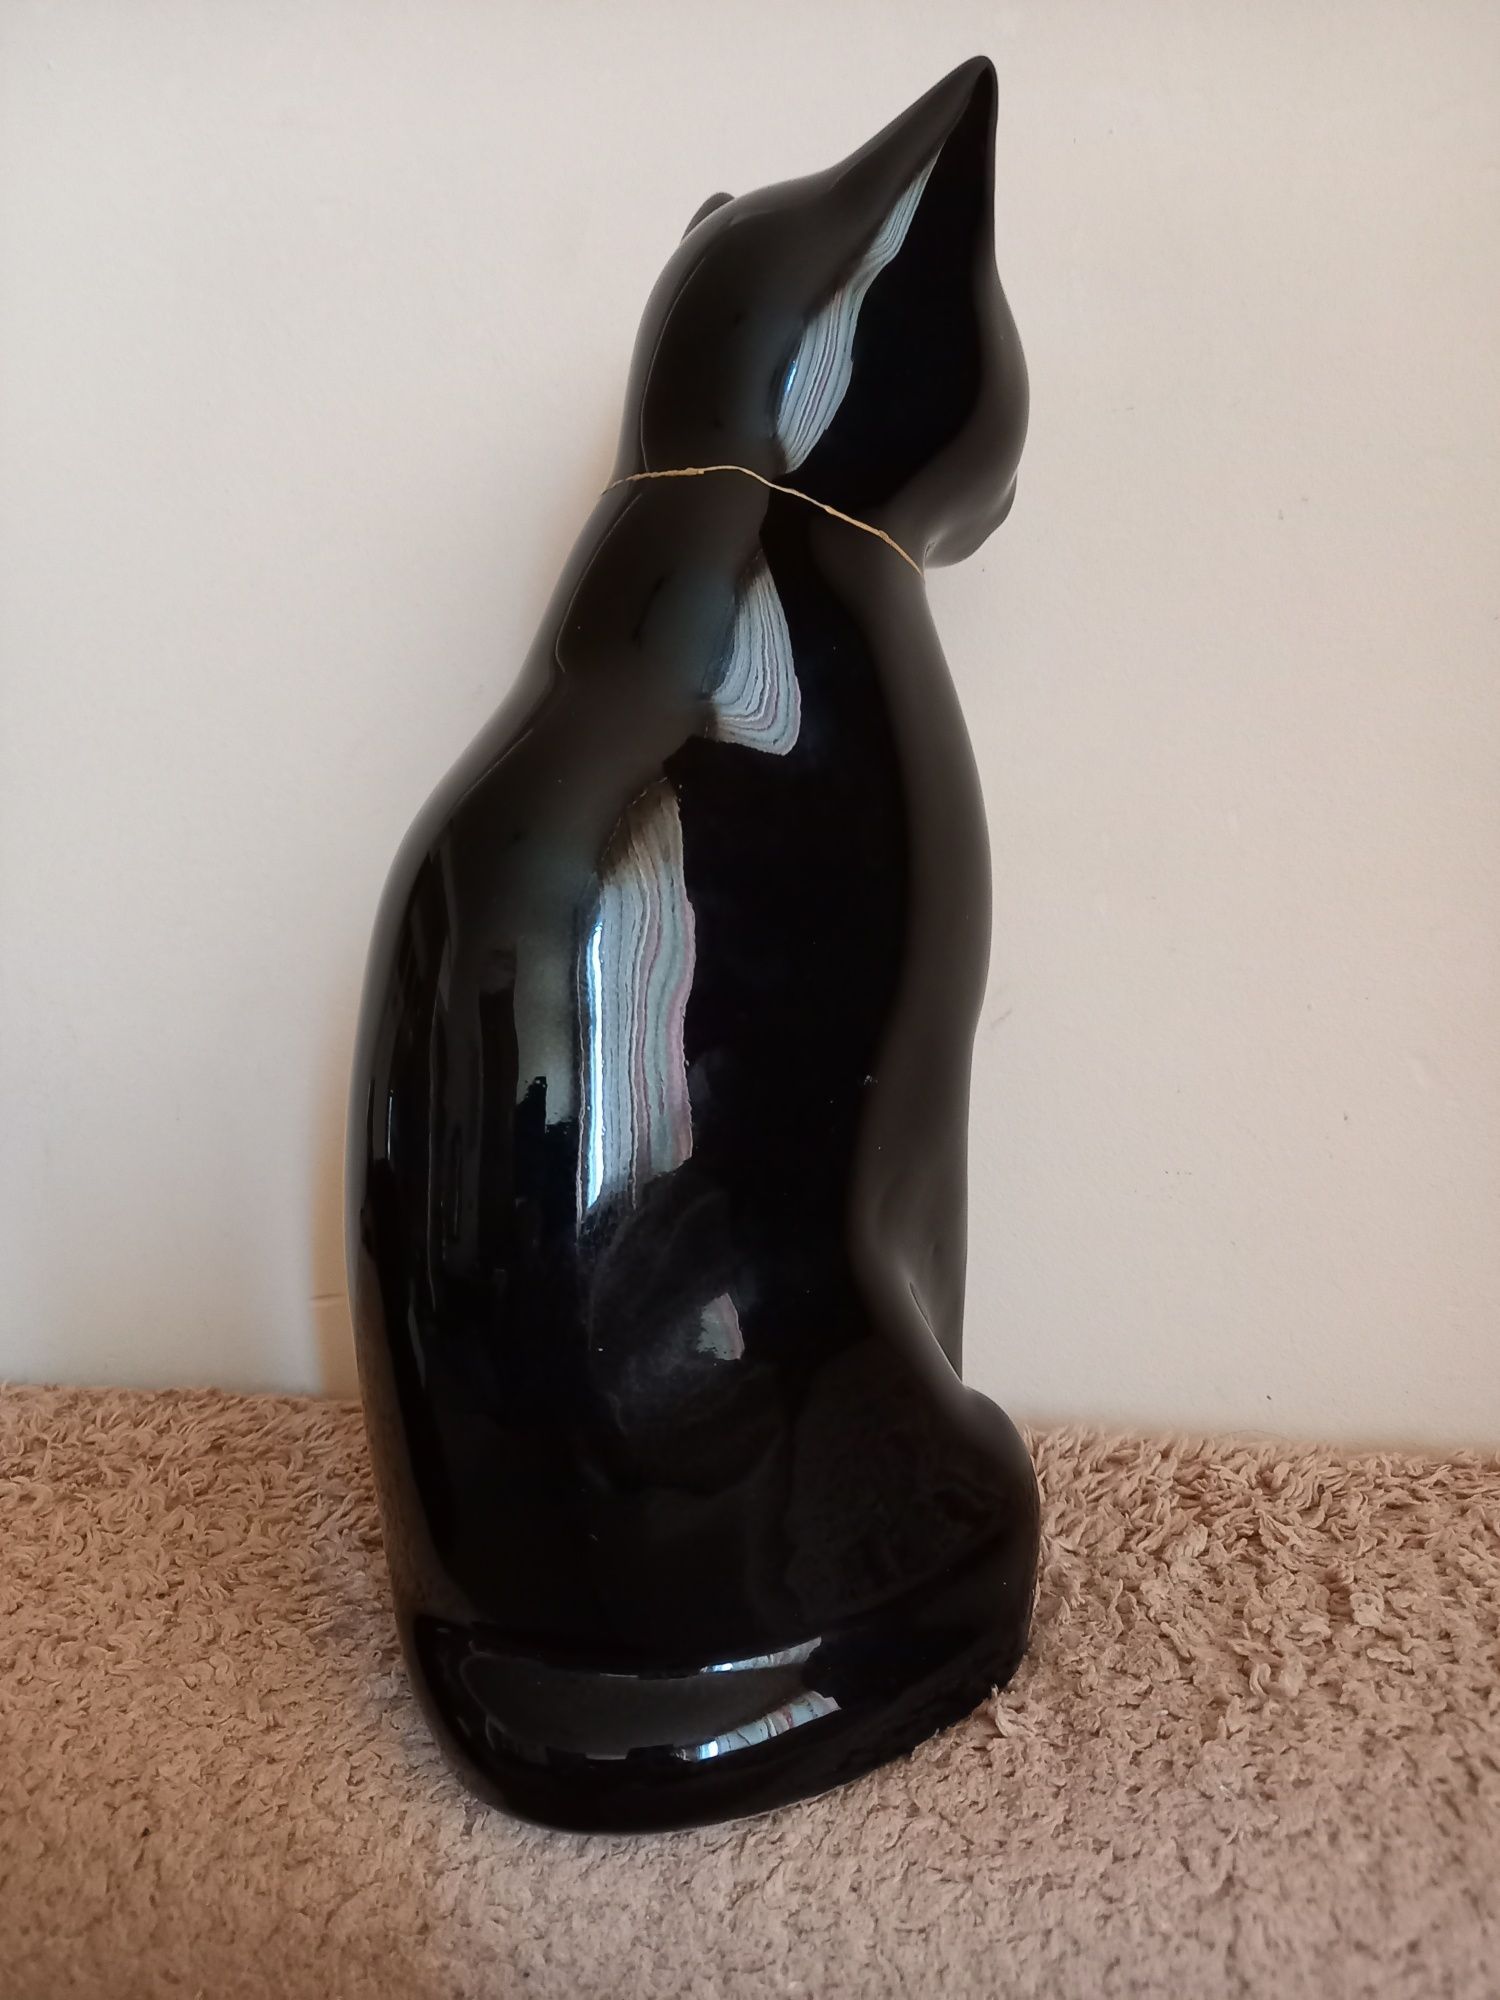 Czarny KOT duża figurka kominkowa, ceramika vintage.